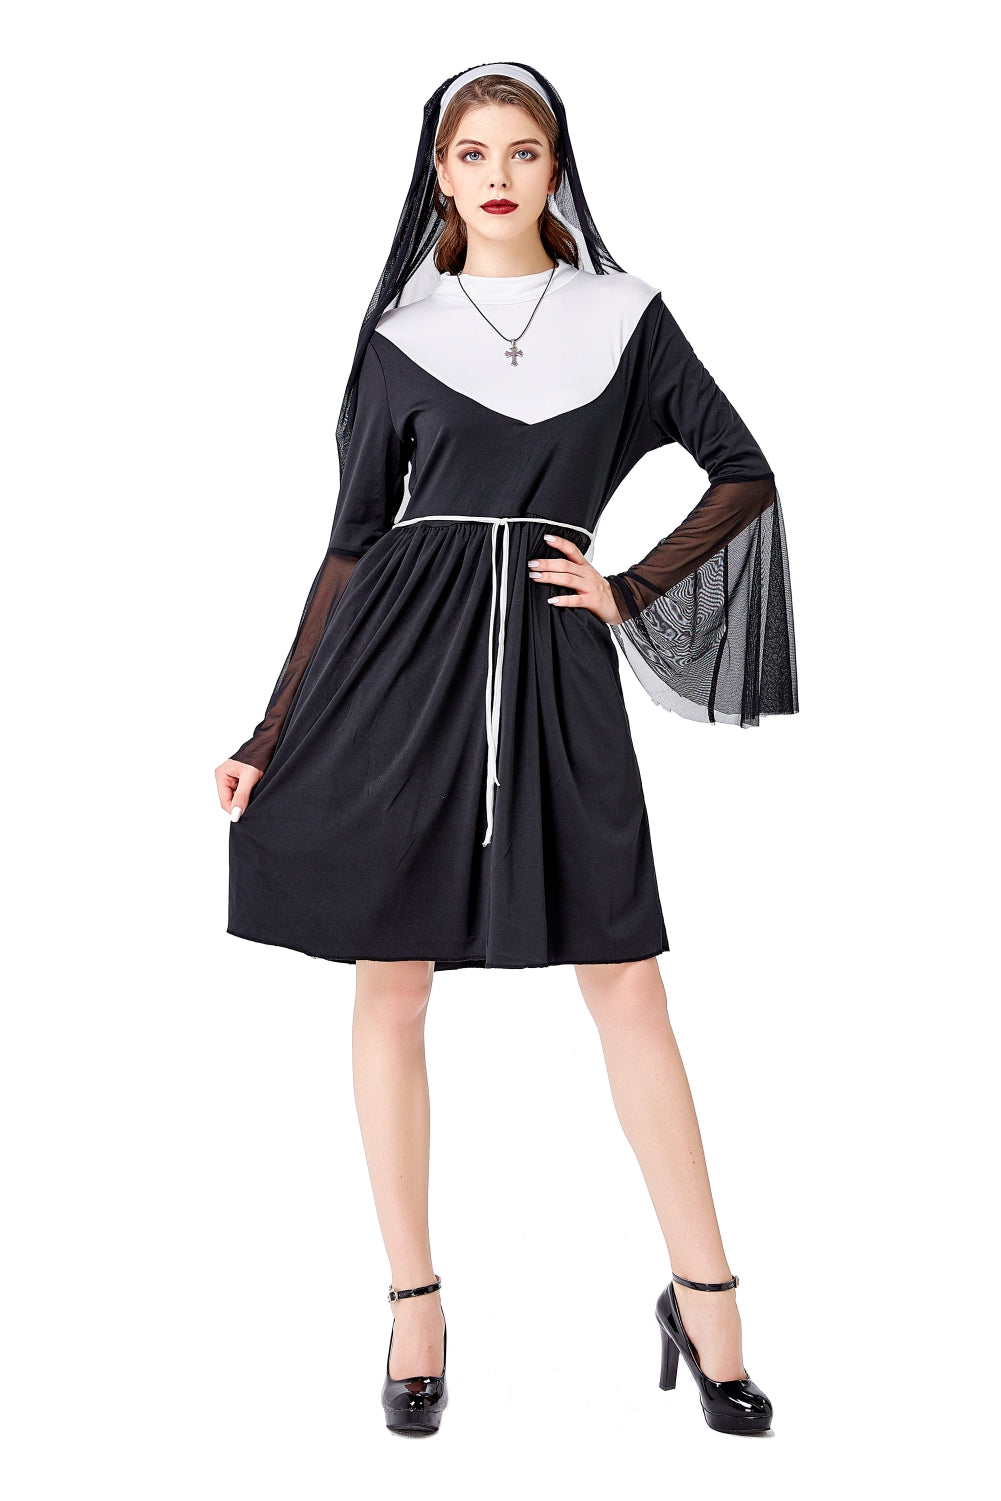 Sexy Black Thigh-skimming Nun Costume.